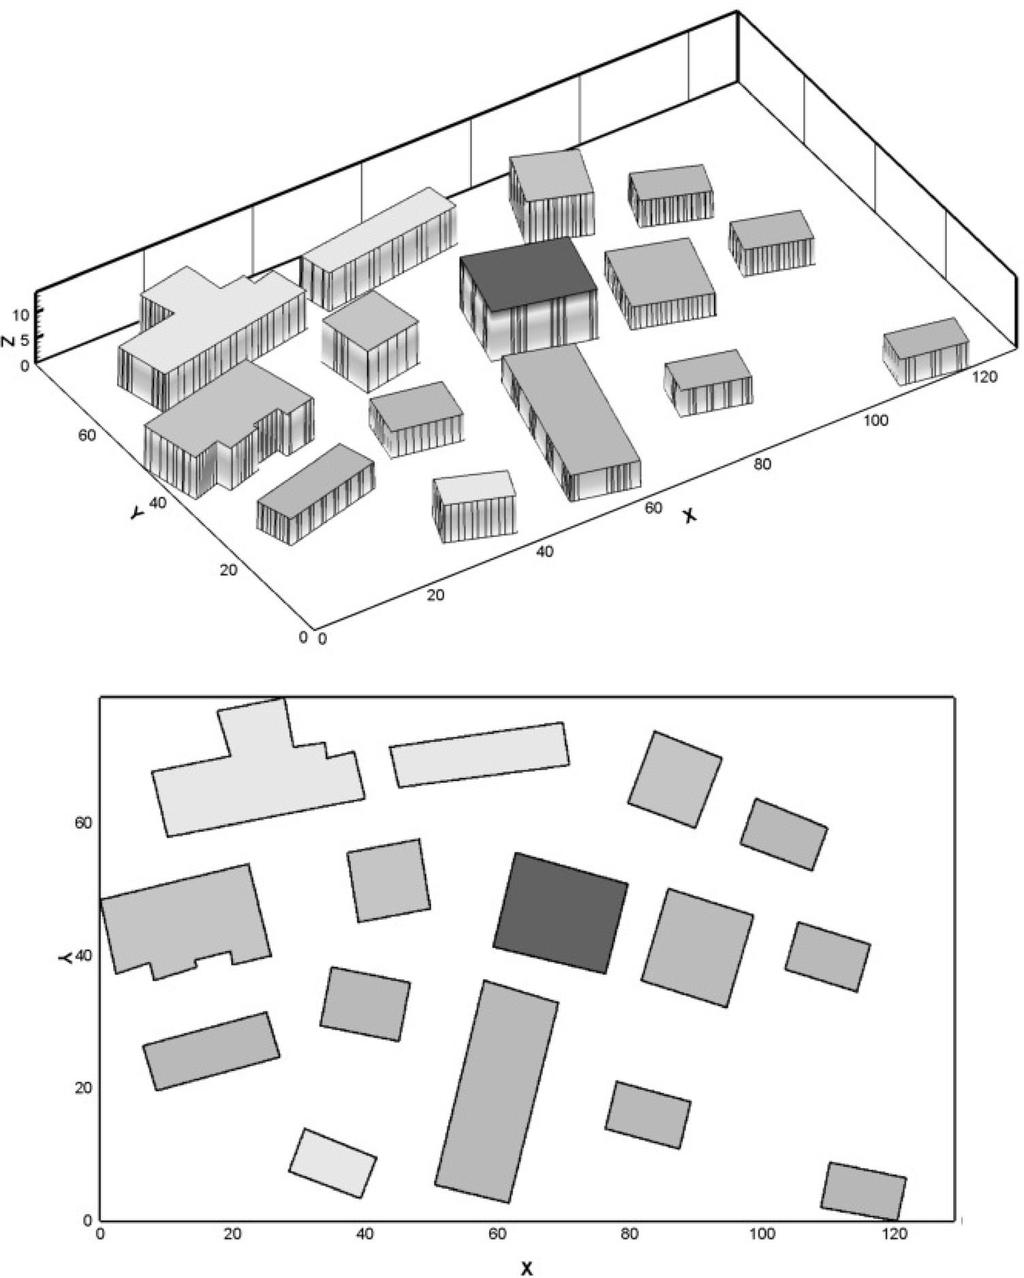 Figure 3-6: Realistic urban environment model based on